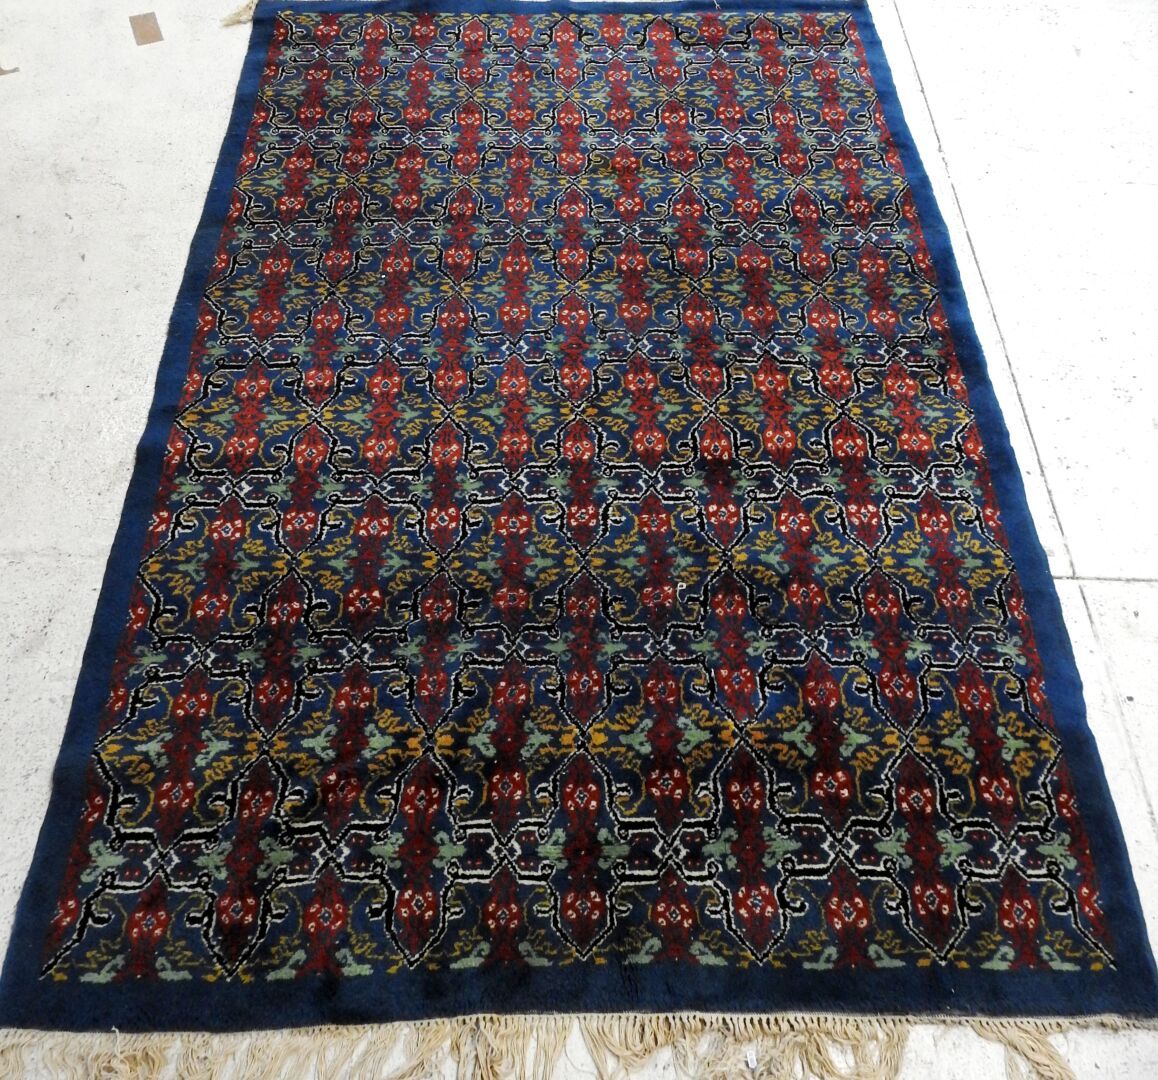 Null 长方形的羊毛地毯，蓝色背景上有红色、绿色和黄色的几何装饰。

约264 x 184厘米。

磨损和撕裂。